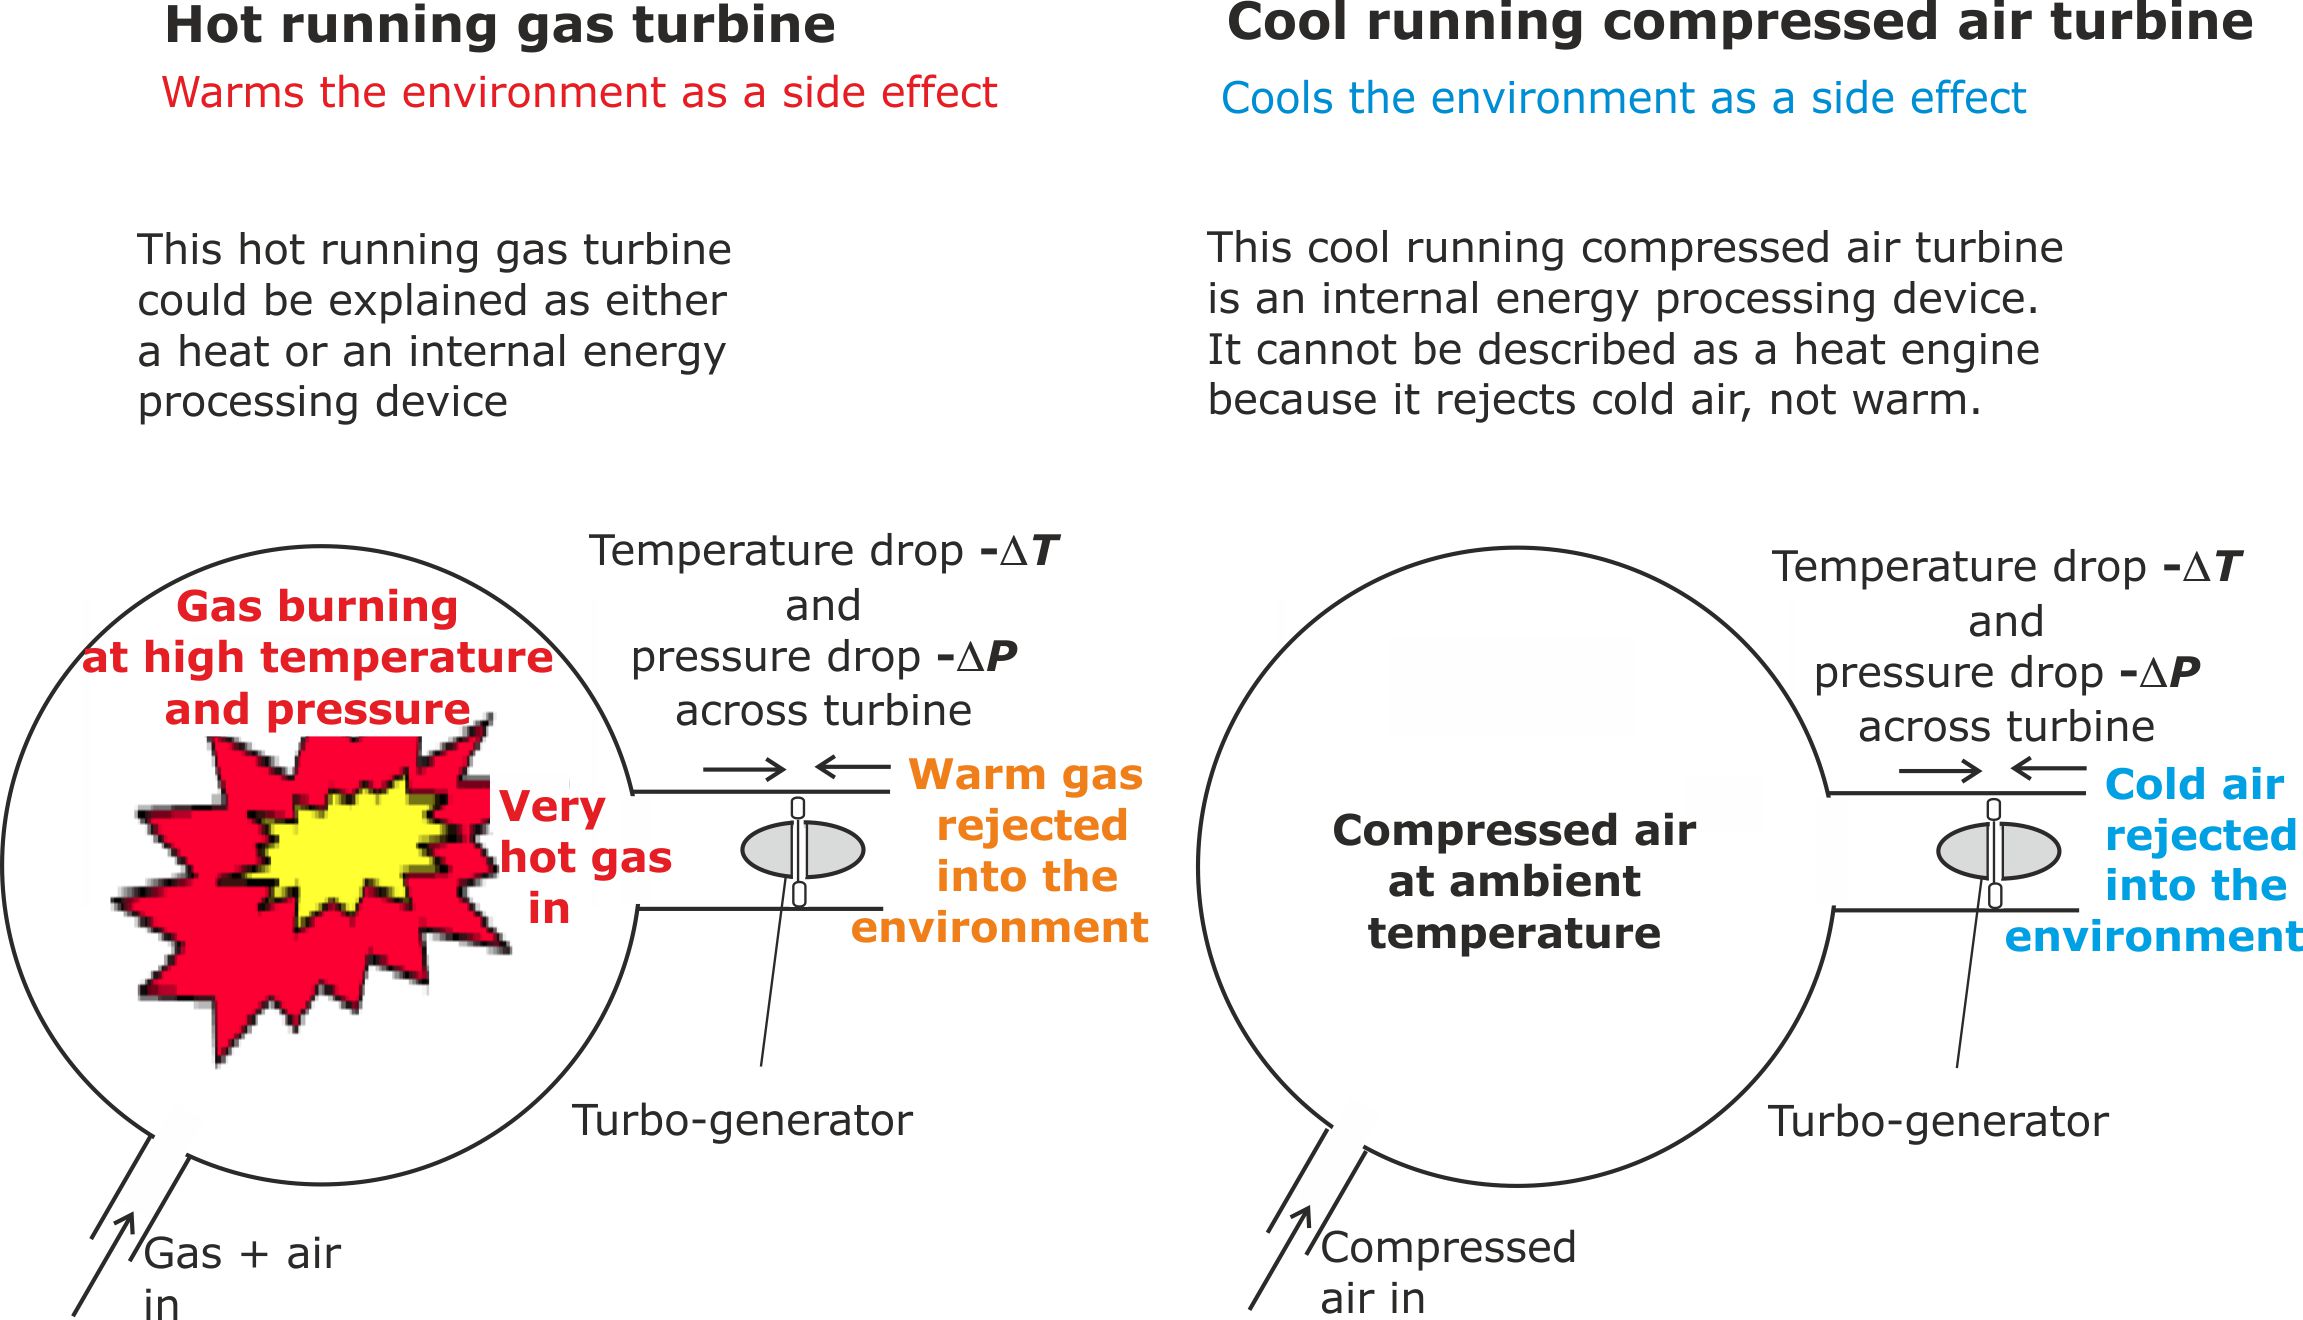 Compressed air turbine.jpg